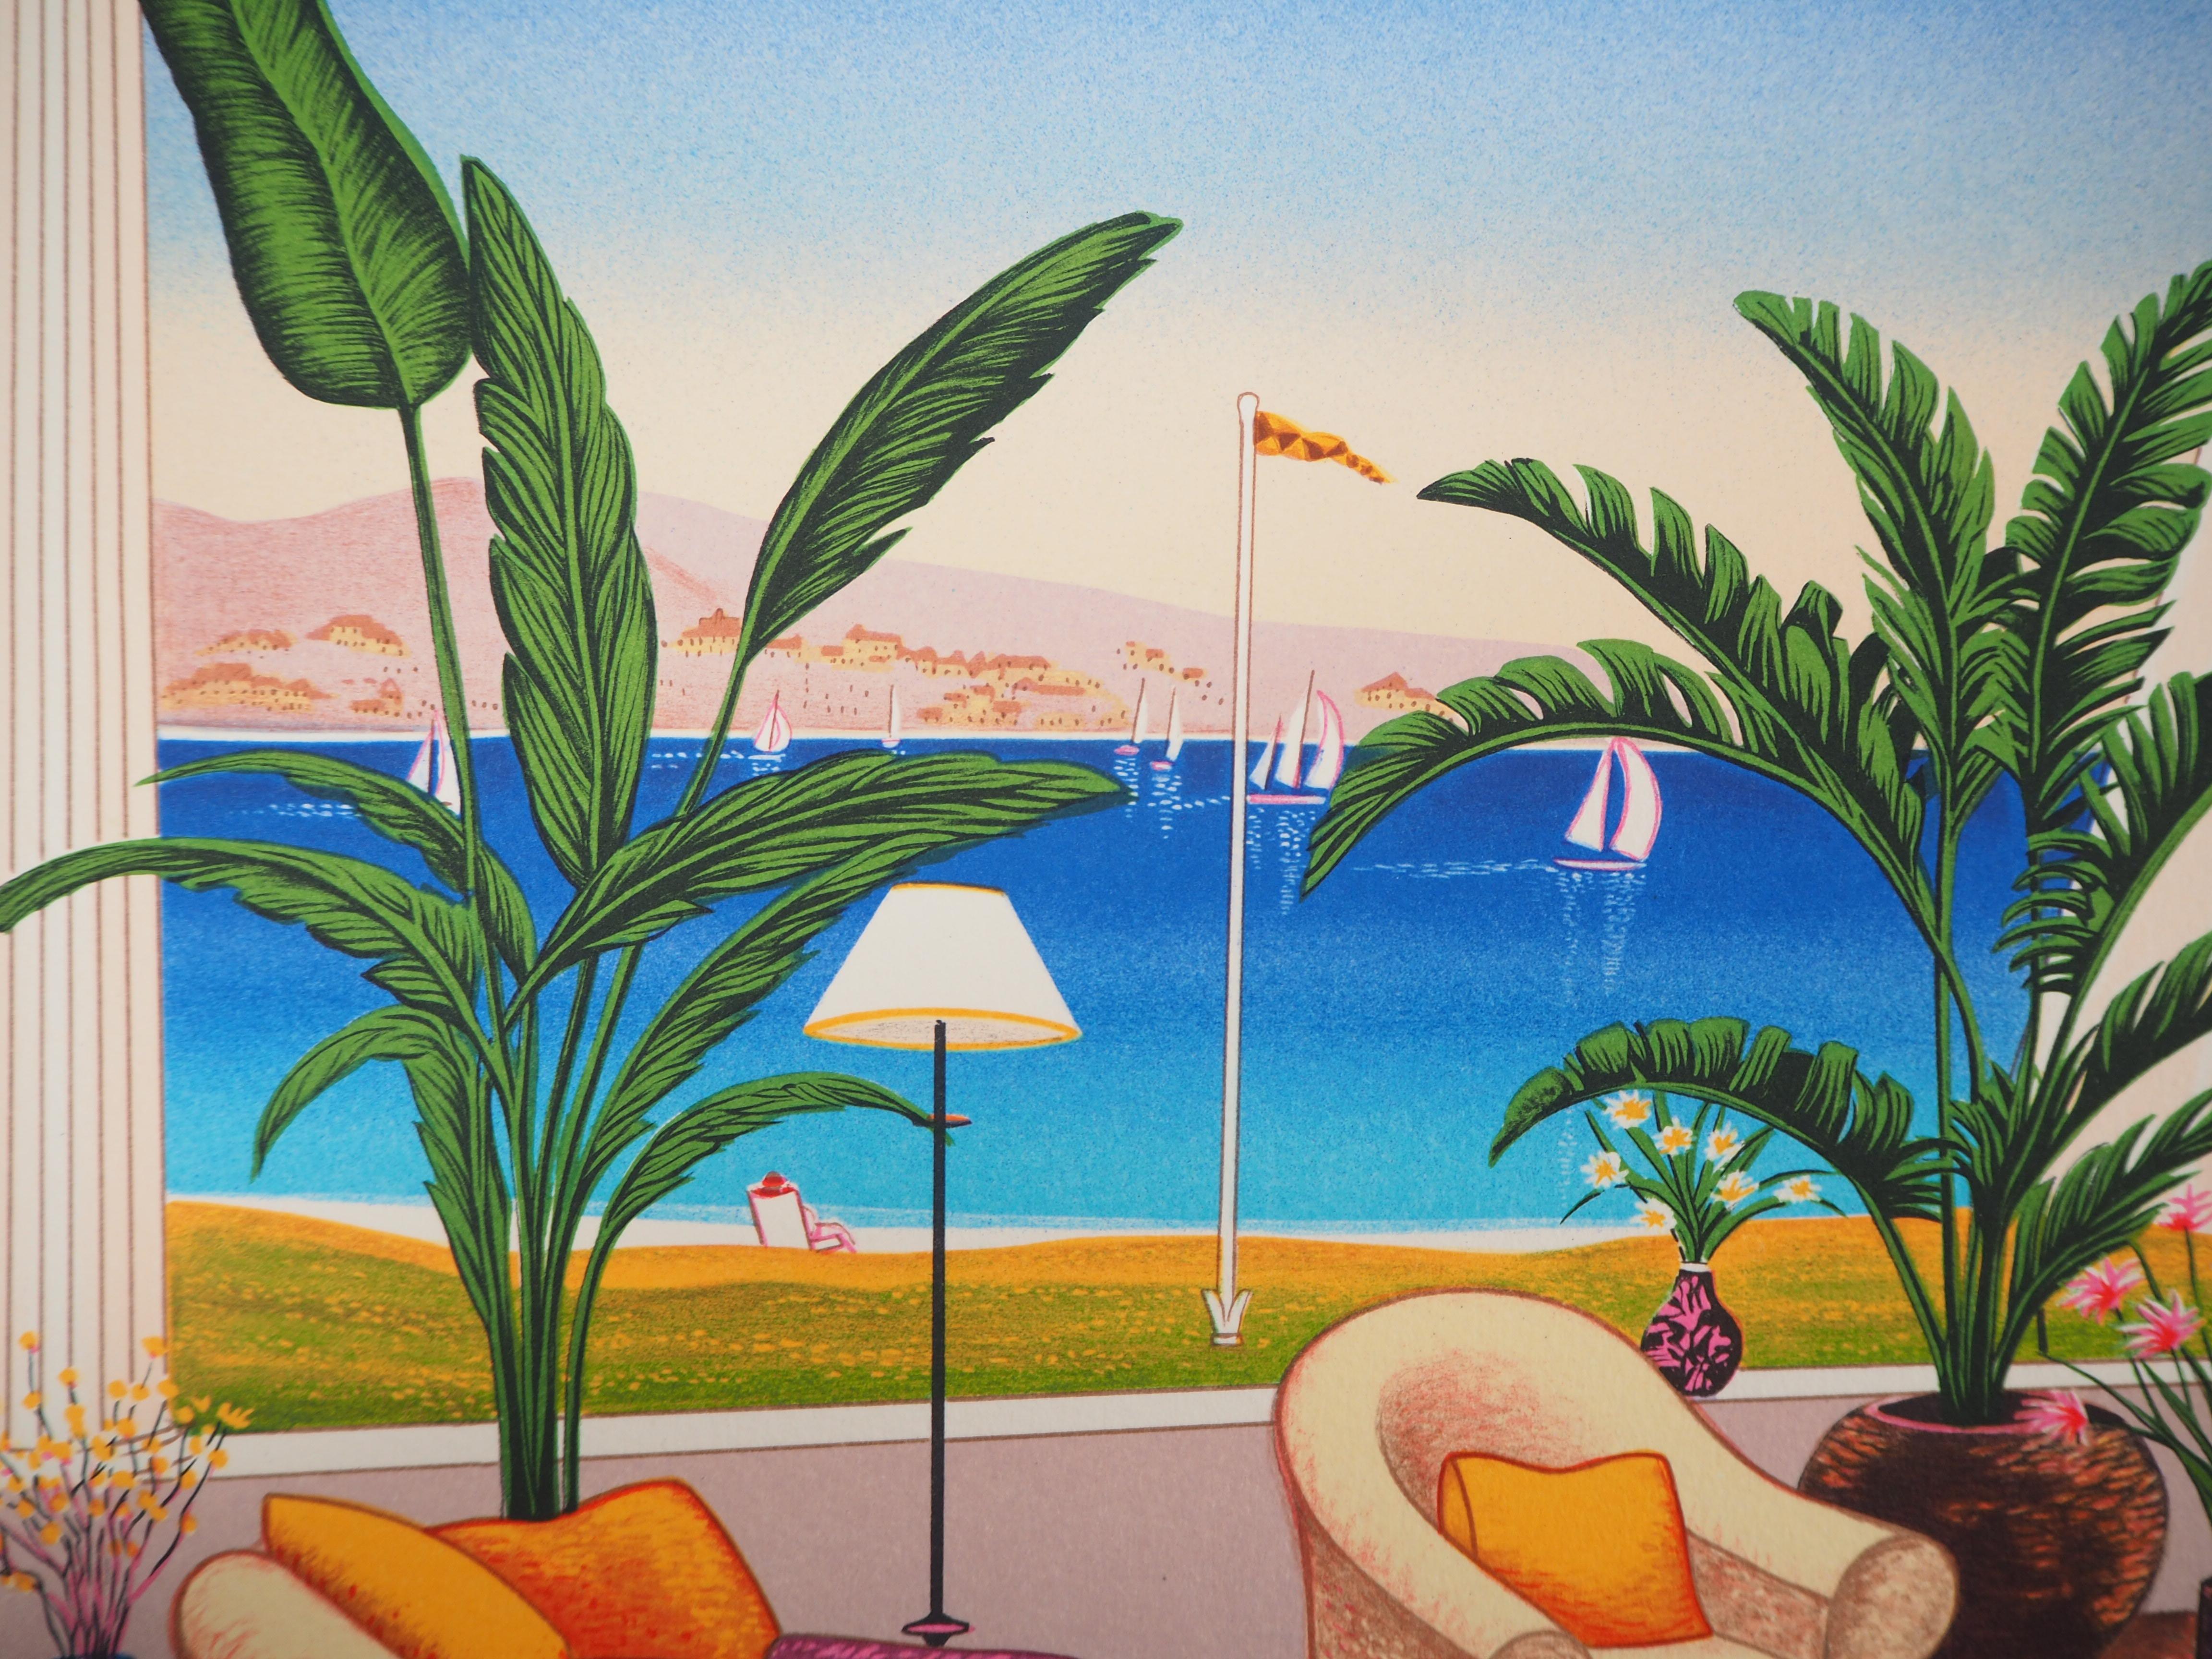 Exclusive Terrace on Gulf of Saint Tropez - Original lithograph - Modern Print by Fanch (Francois Ledan)